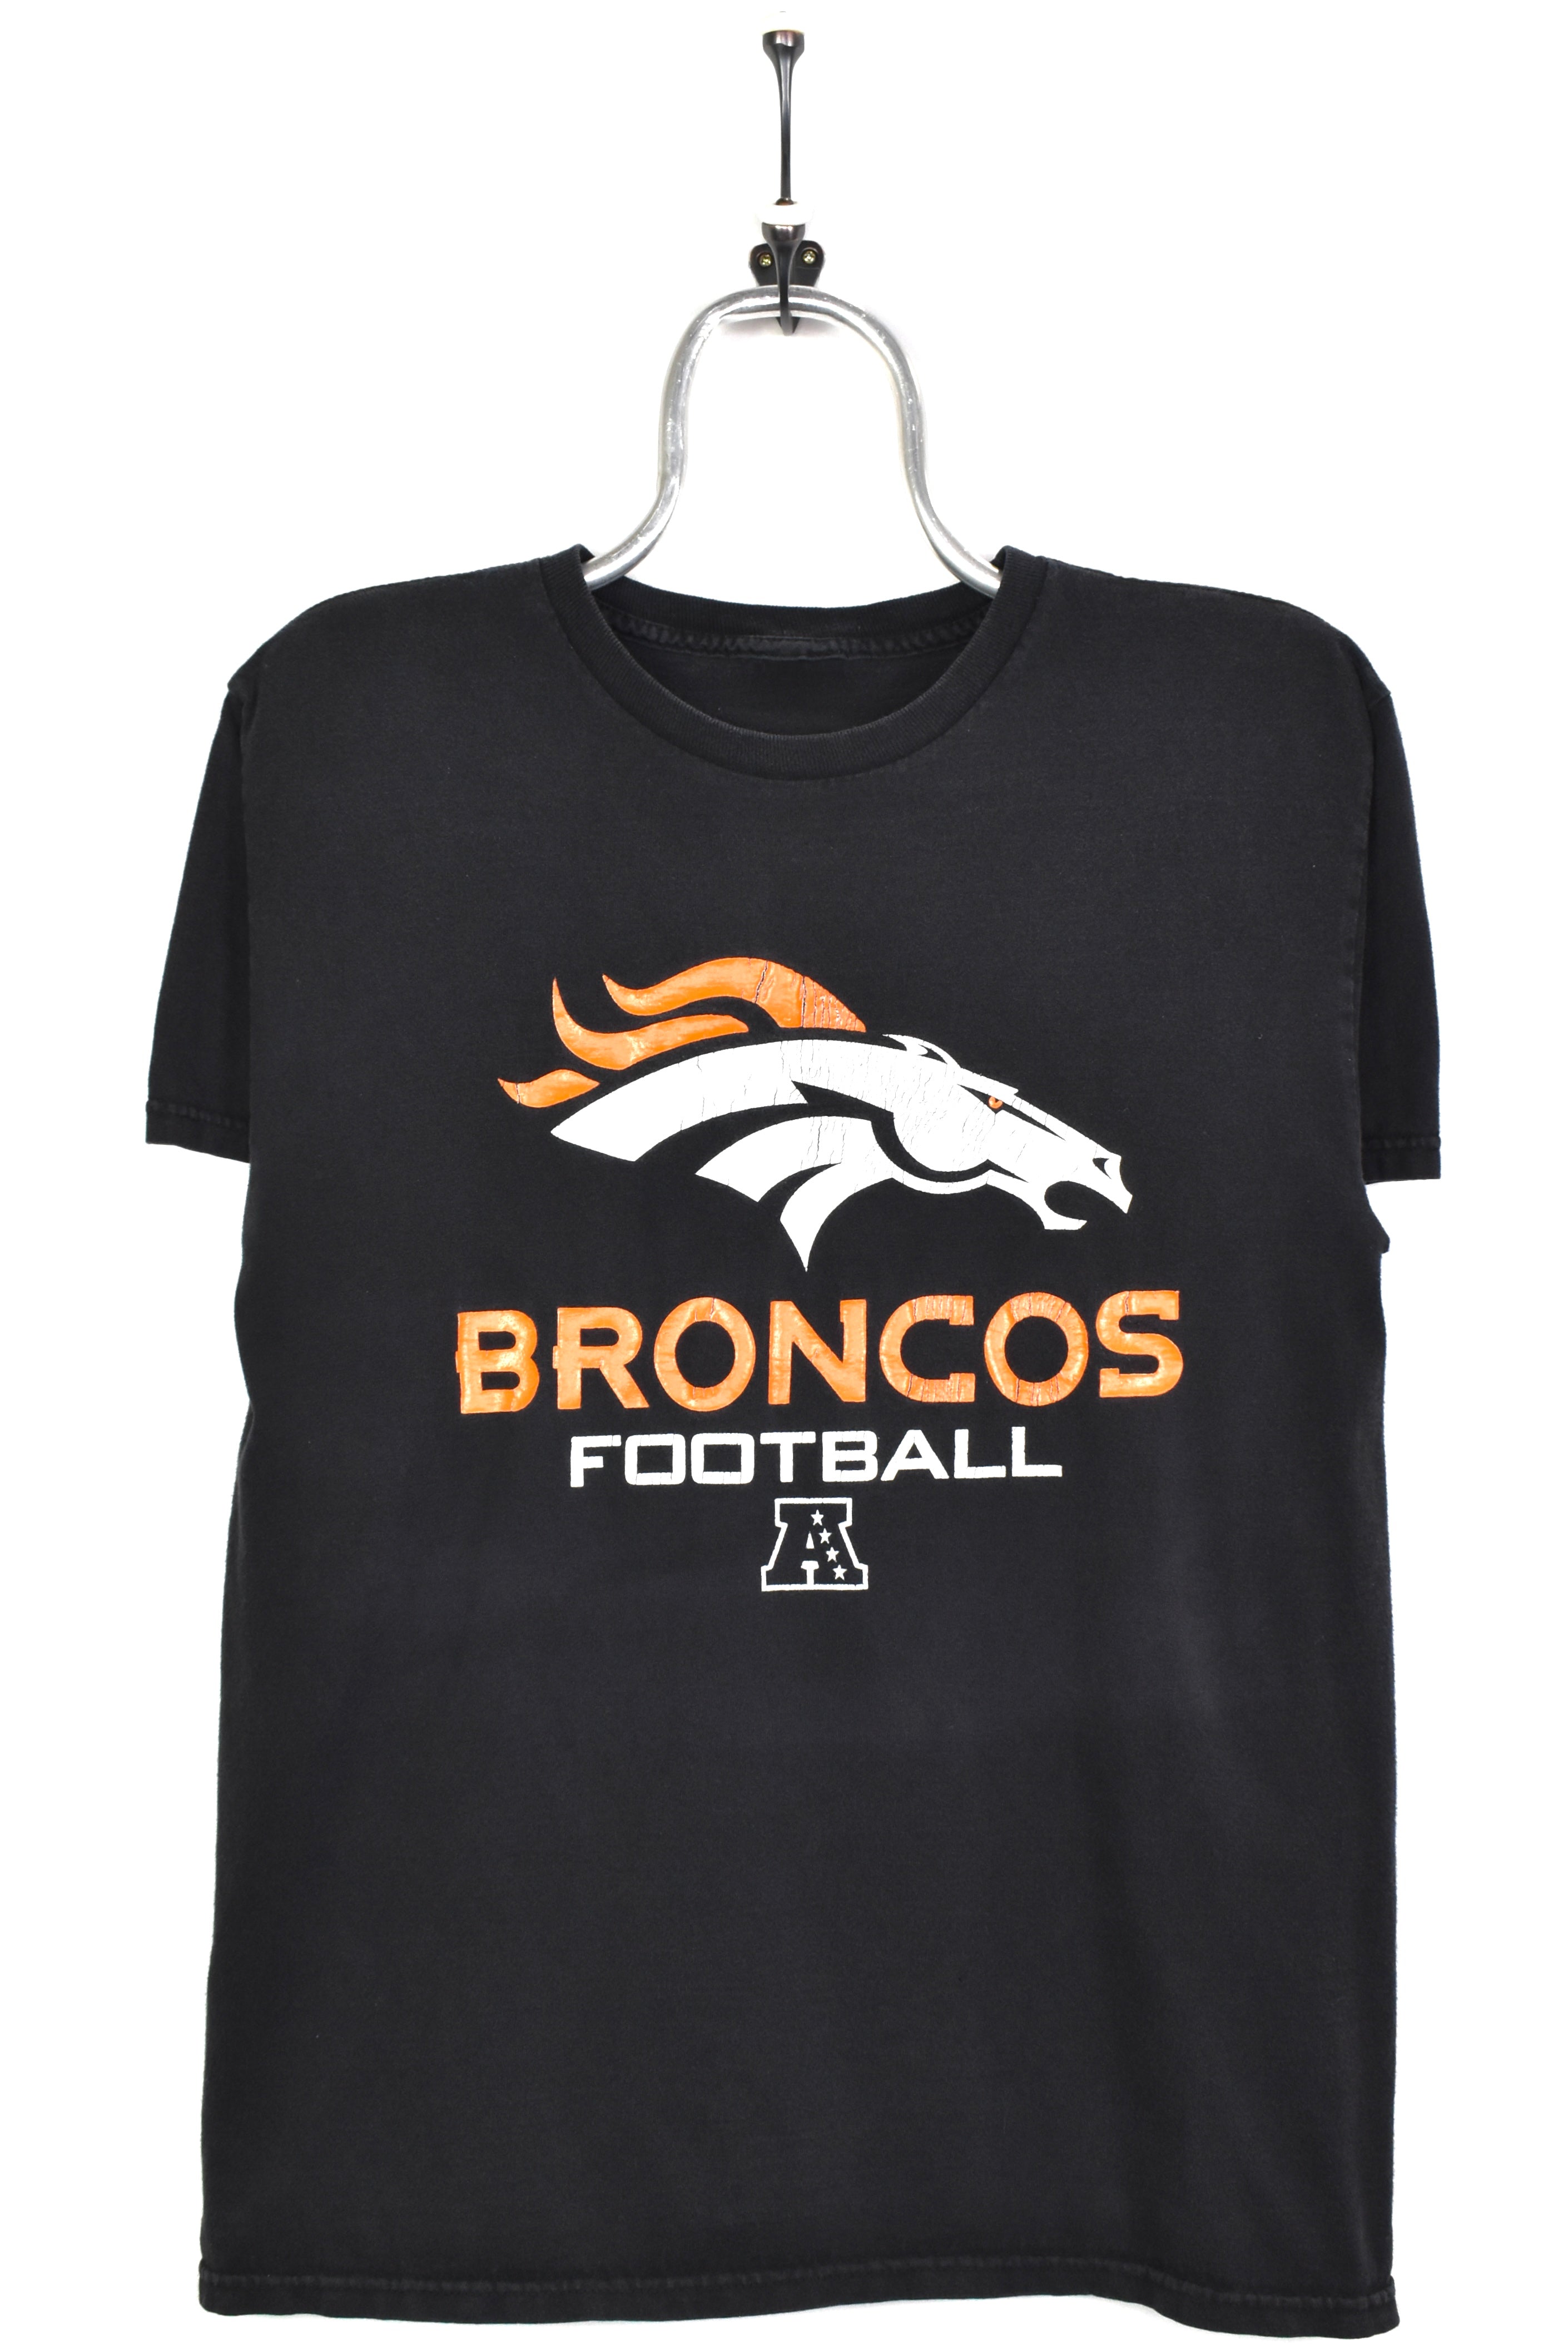 Vintage Denver Broncos shirt, NFL black graphic tee - small PRO SPORT